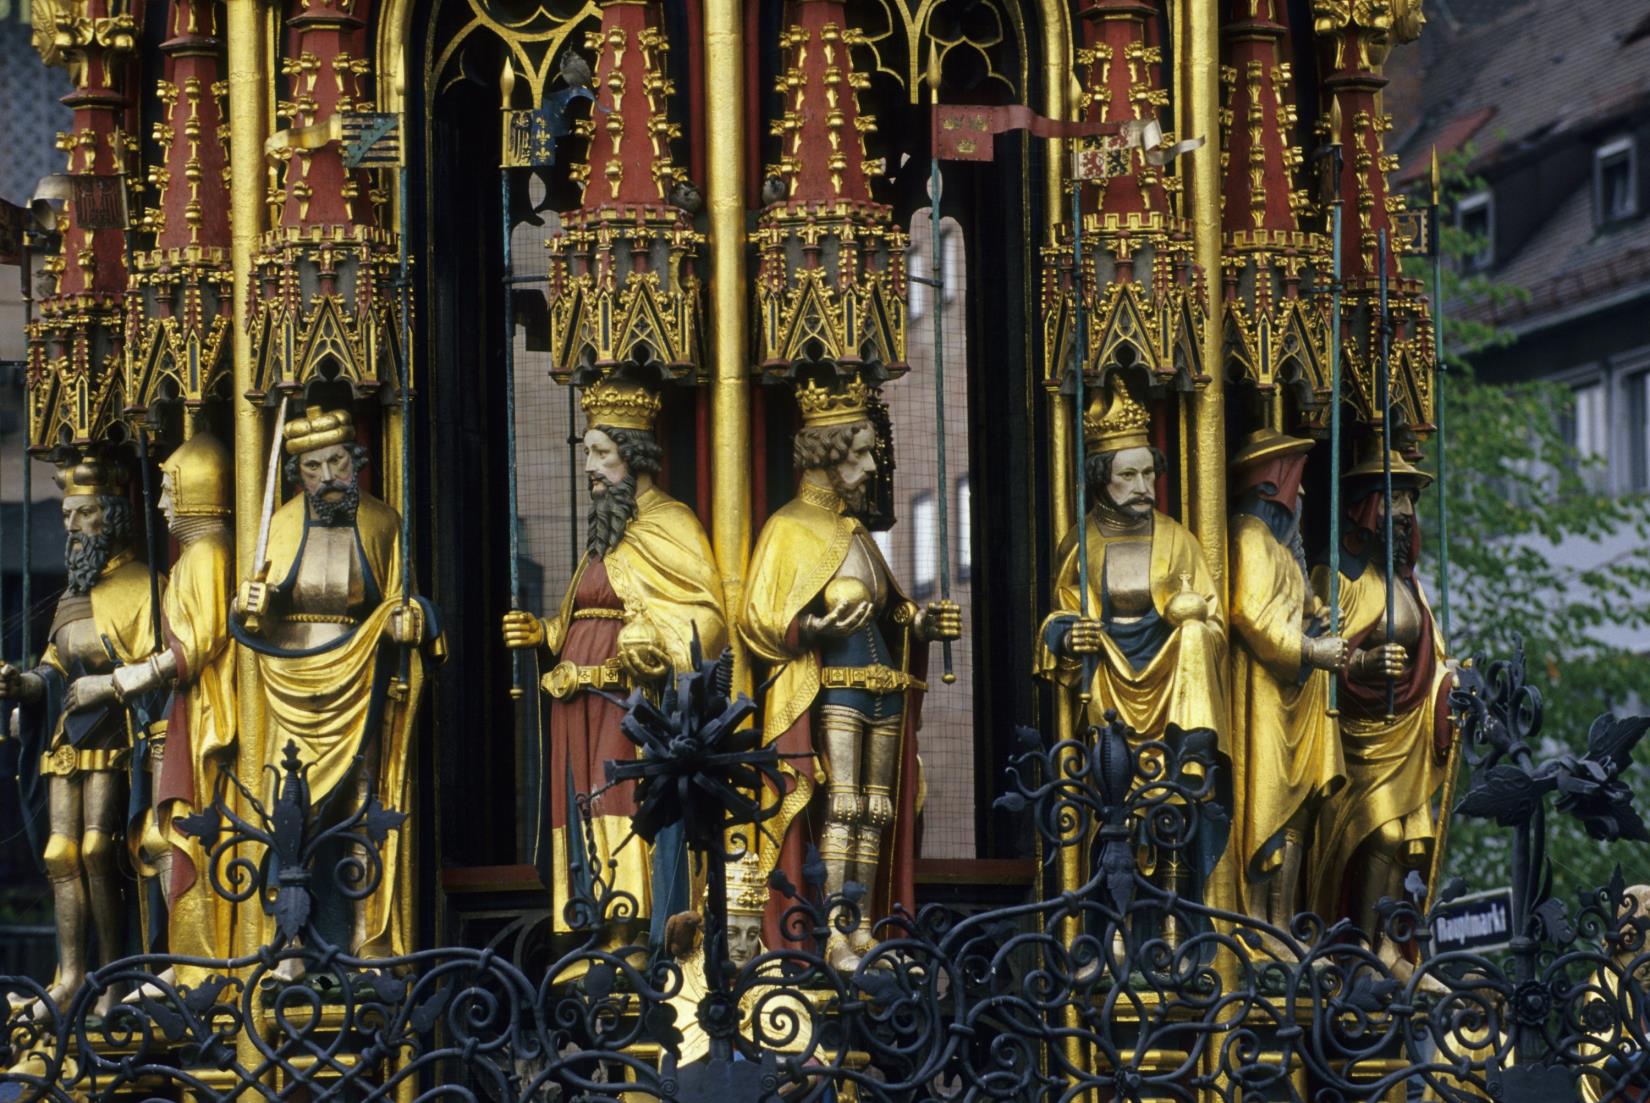 Gilded statues at Nuremberg's Schöner Brunnen, Germany, Jan. 1, 2003. (Getty Images Photo)